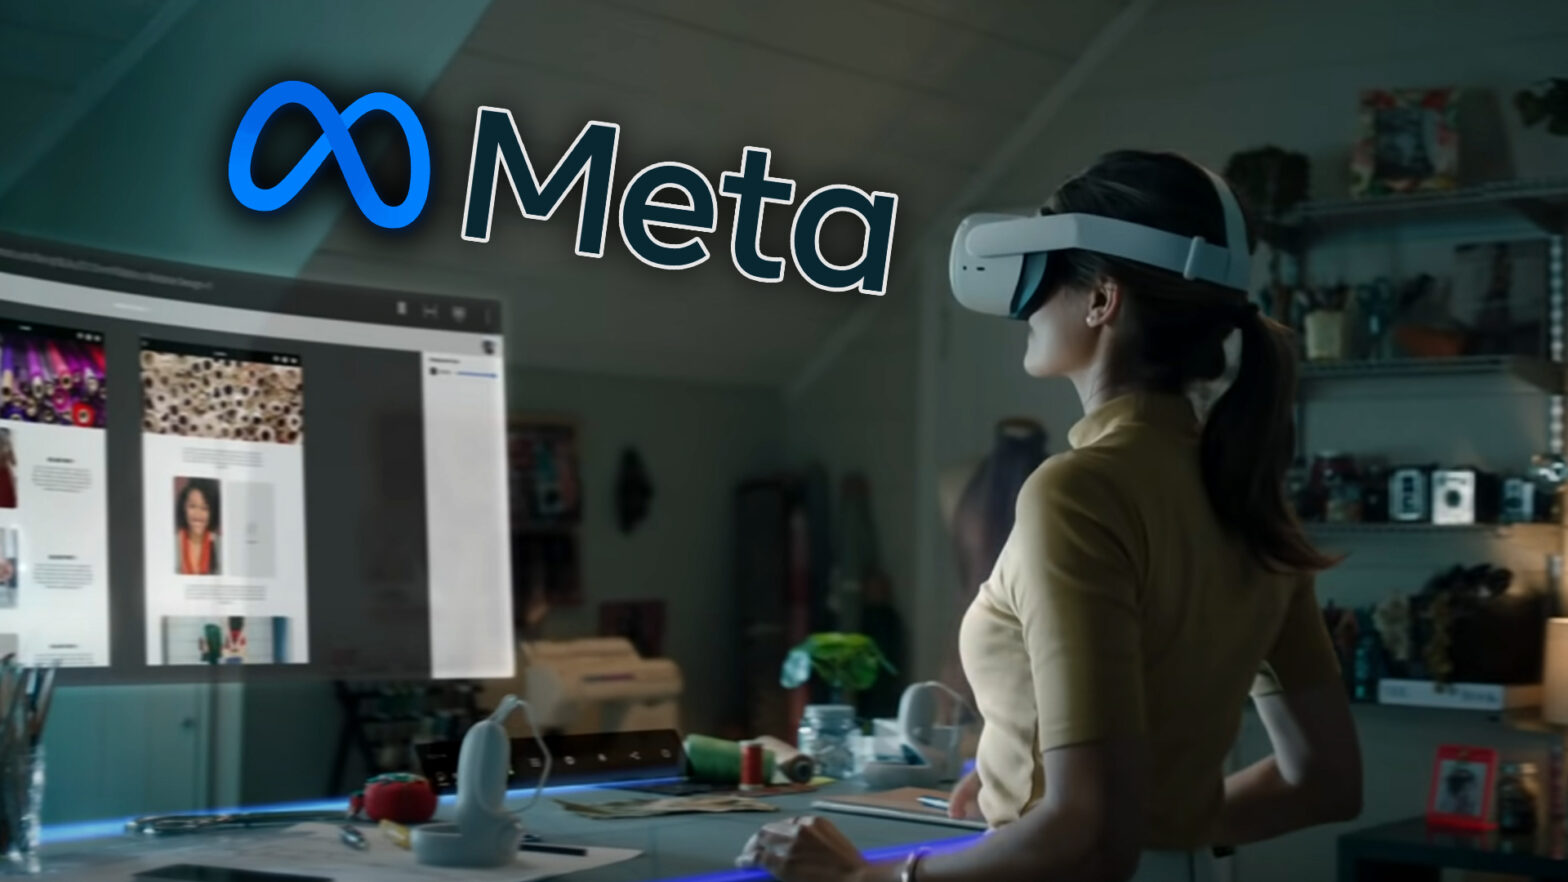 Meta imagine le futur PC dans un casque VR